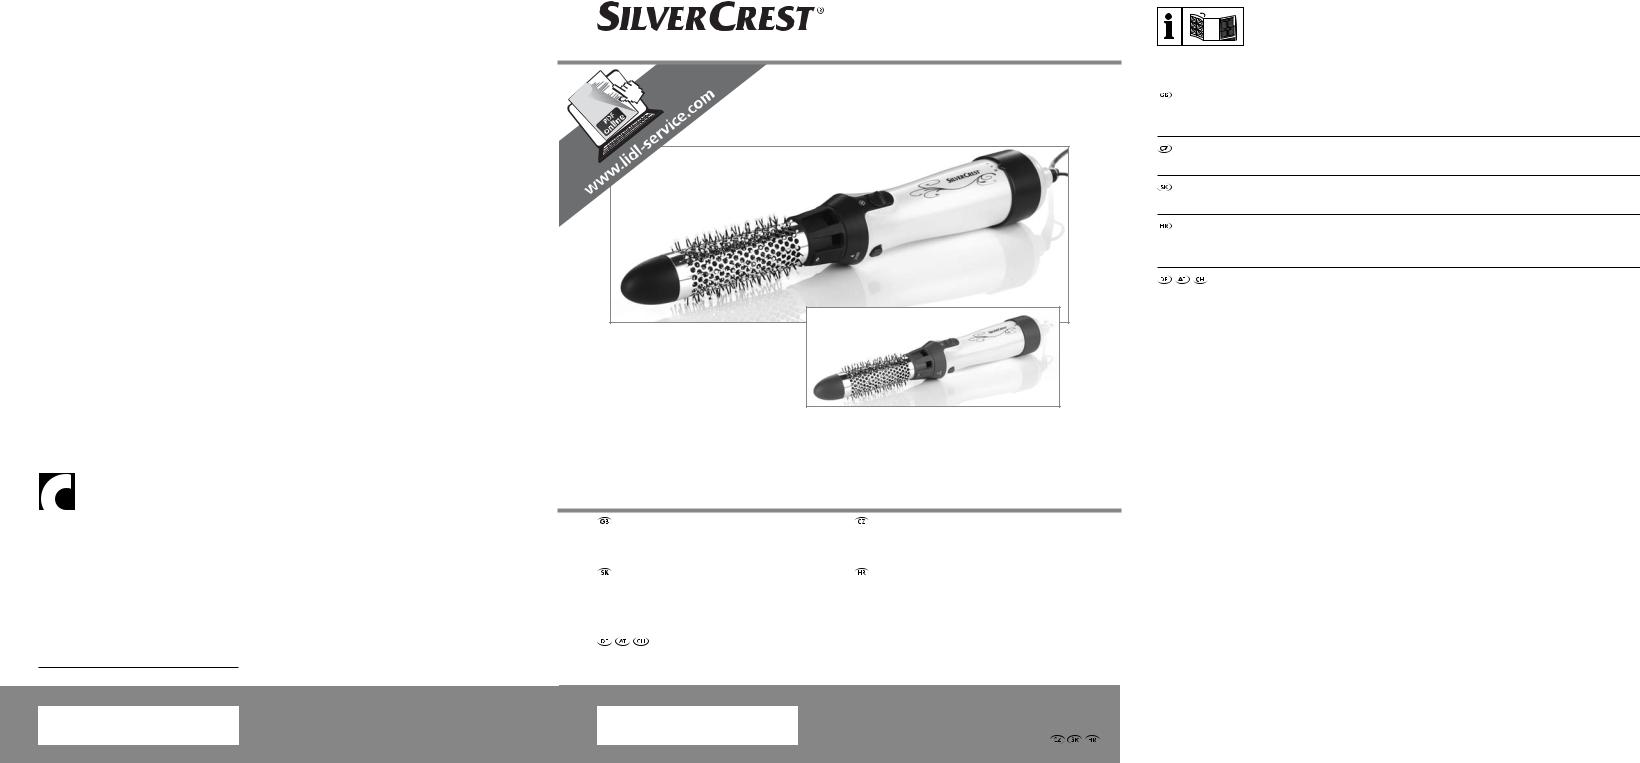 Silvercrest SWCD 1000 A1 User Manual